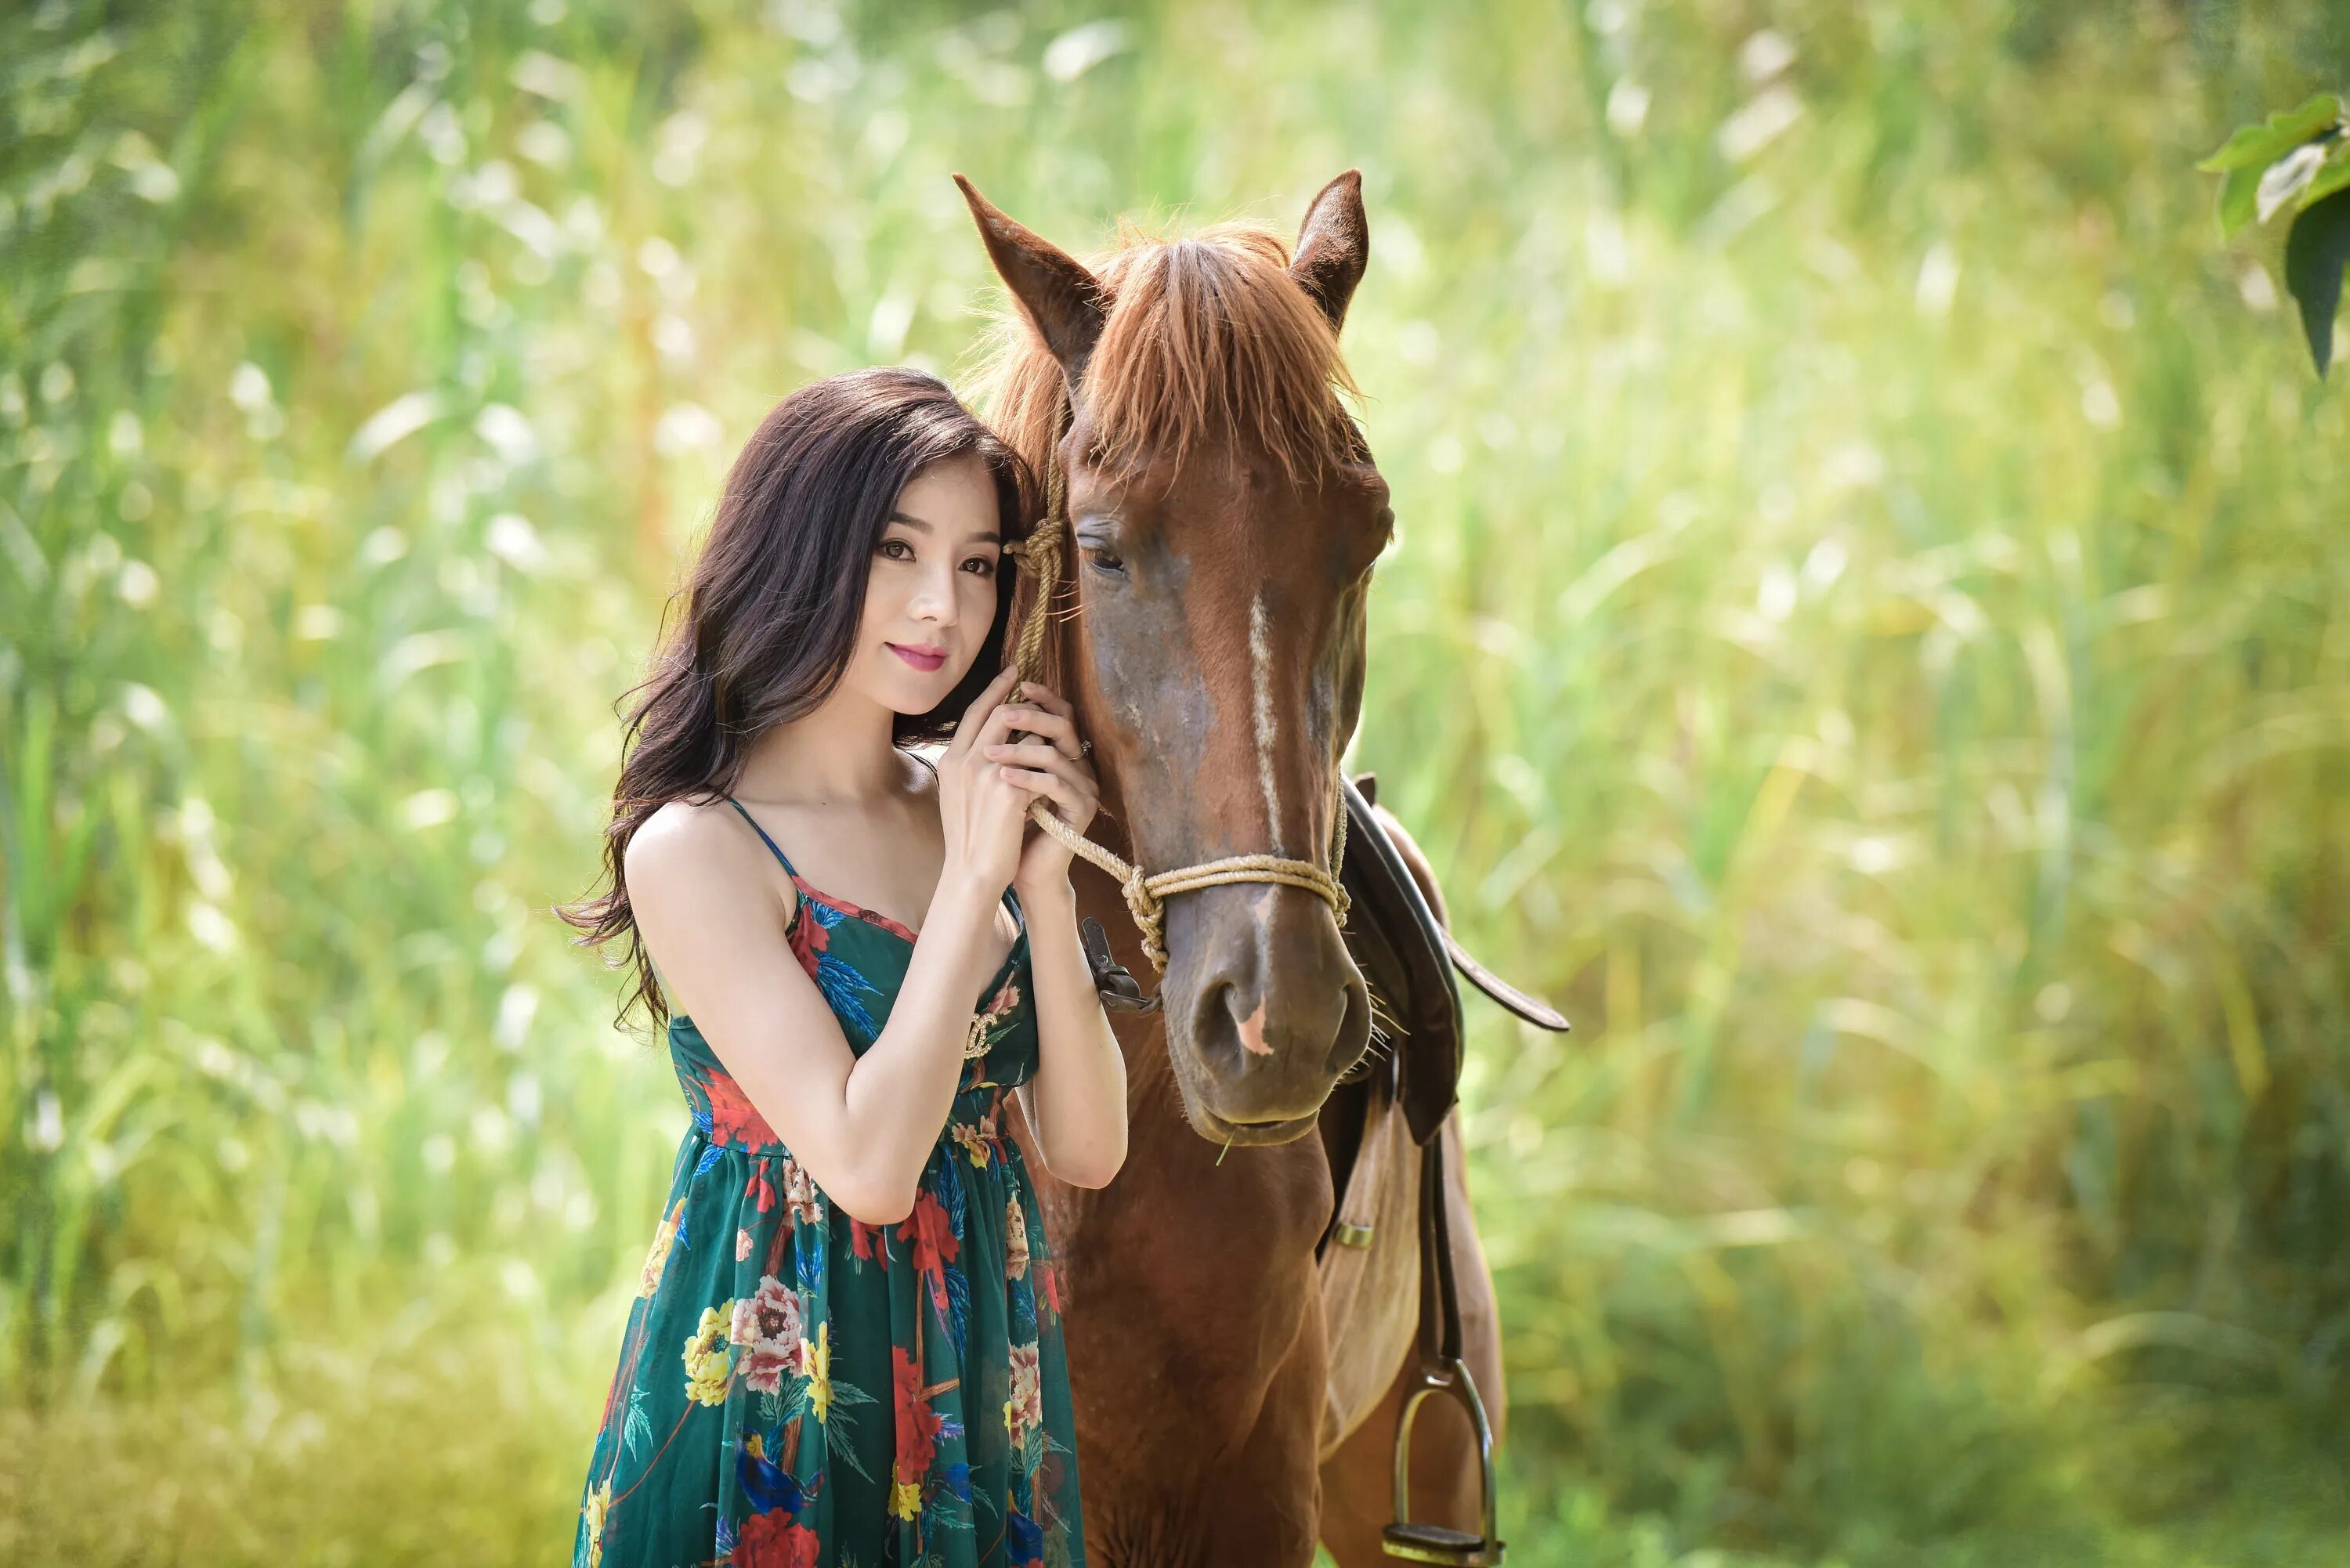 Девушка с лошадью видео. Фотосессия с лошадьми. Женщина на лошади. Девушка с лошадью. Девочка на лошади.